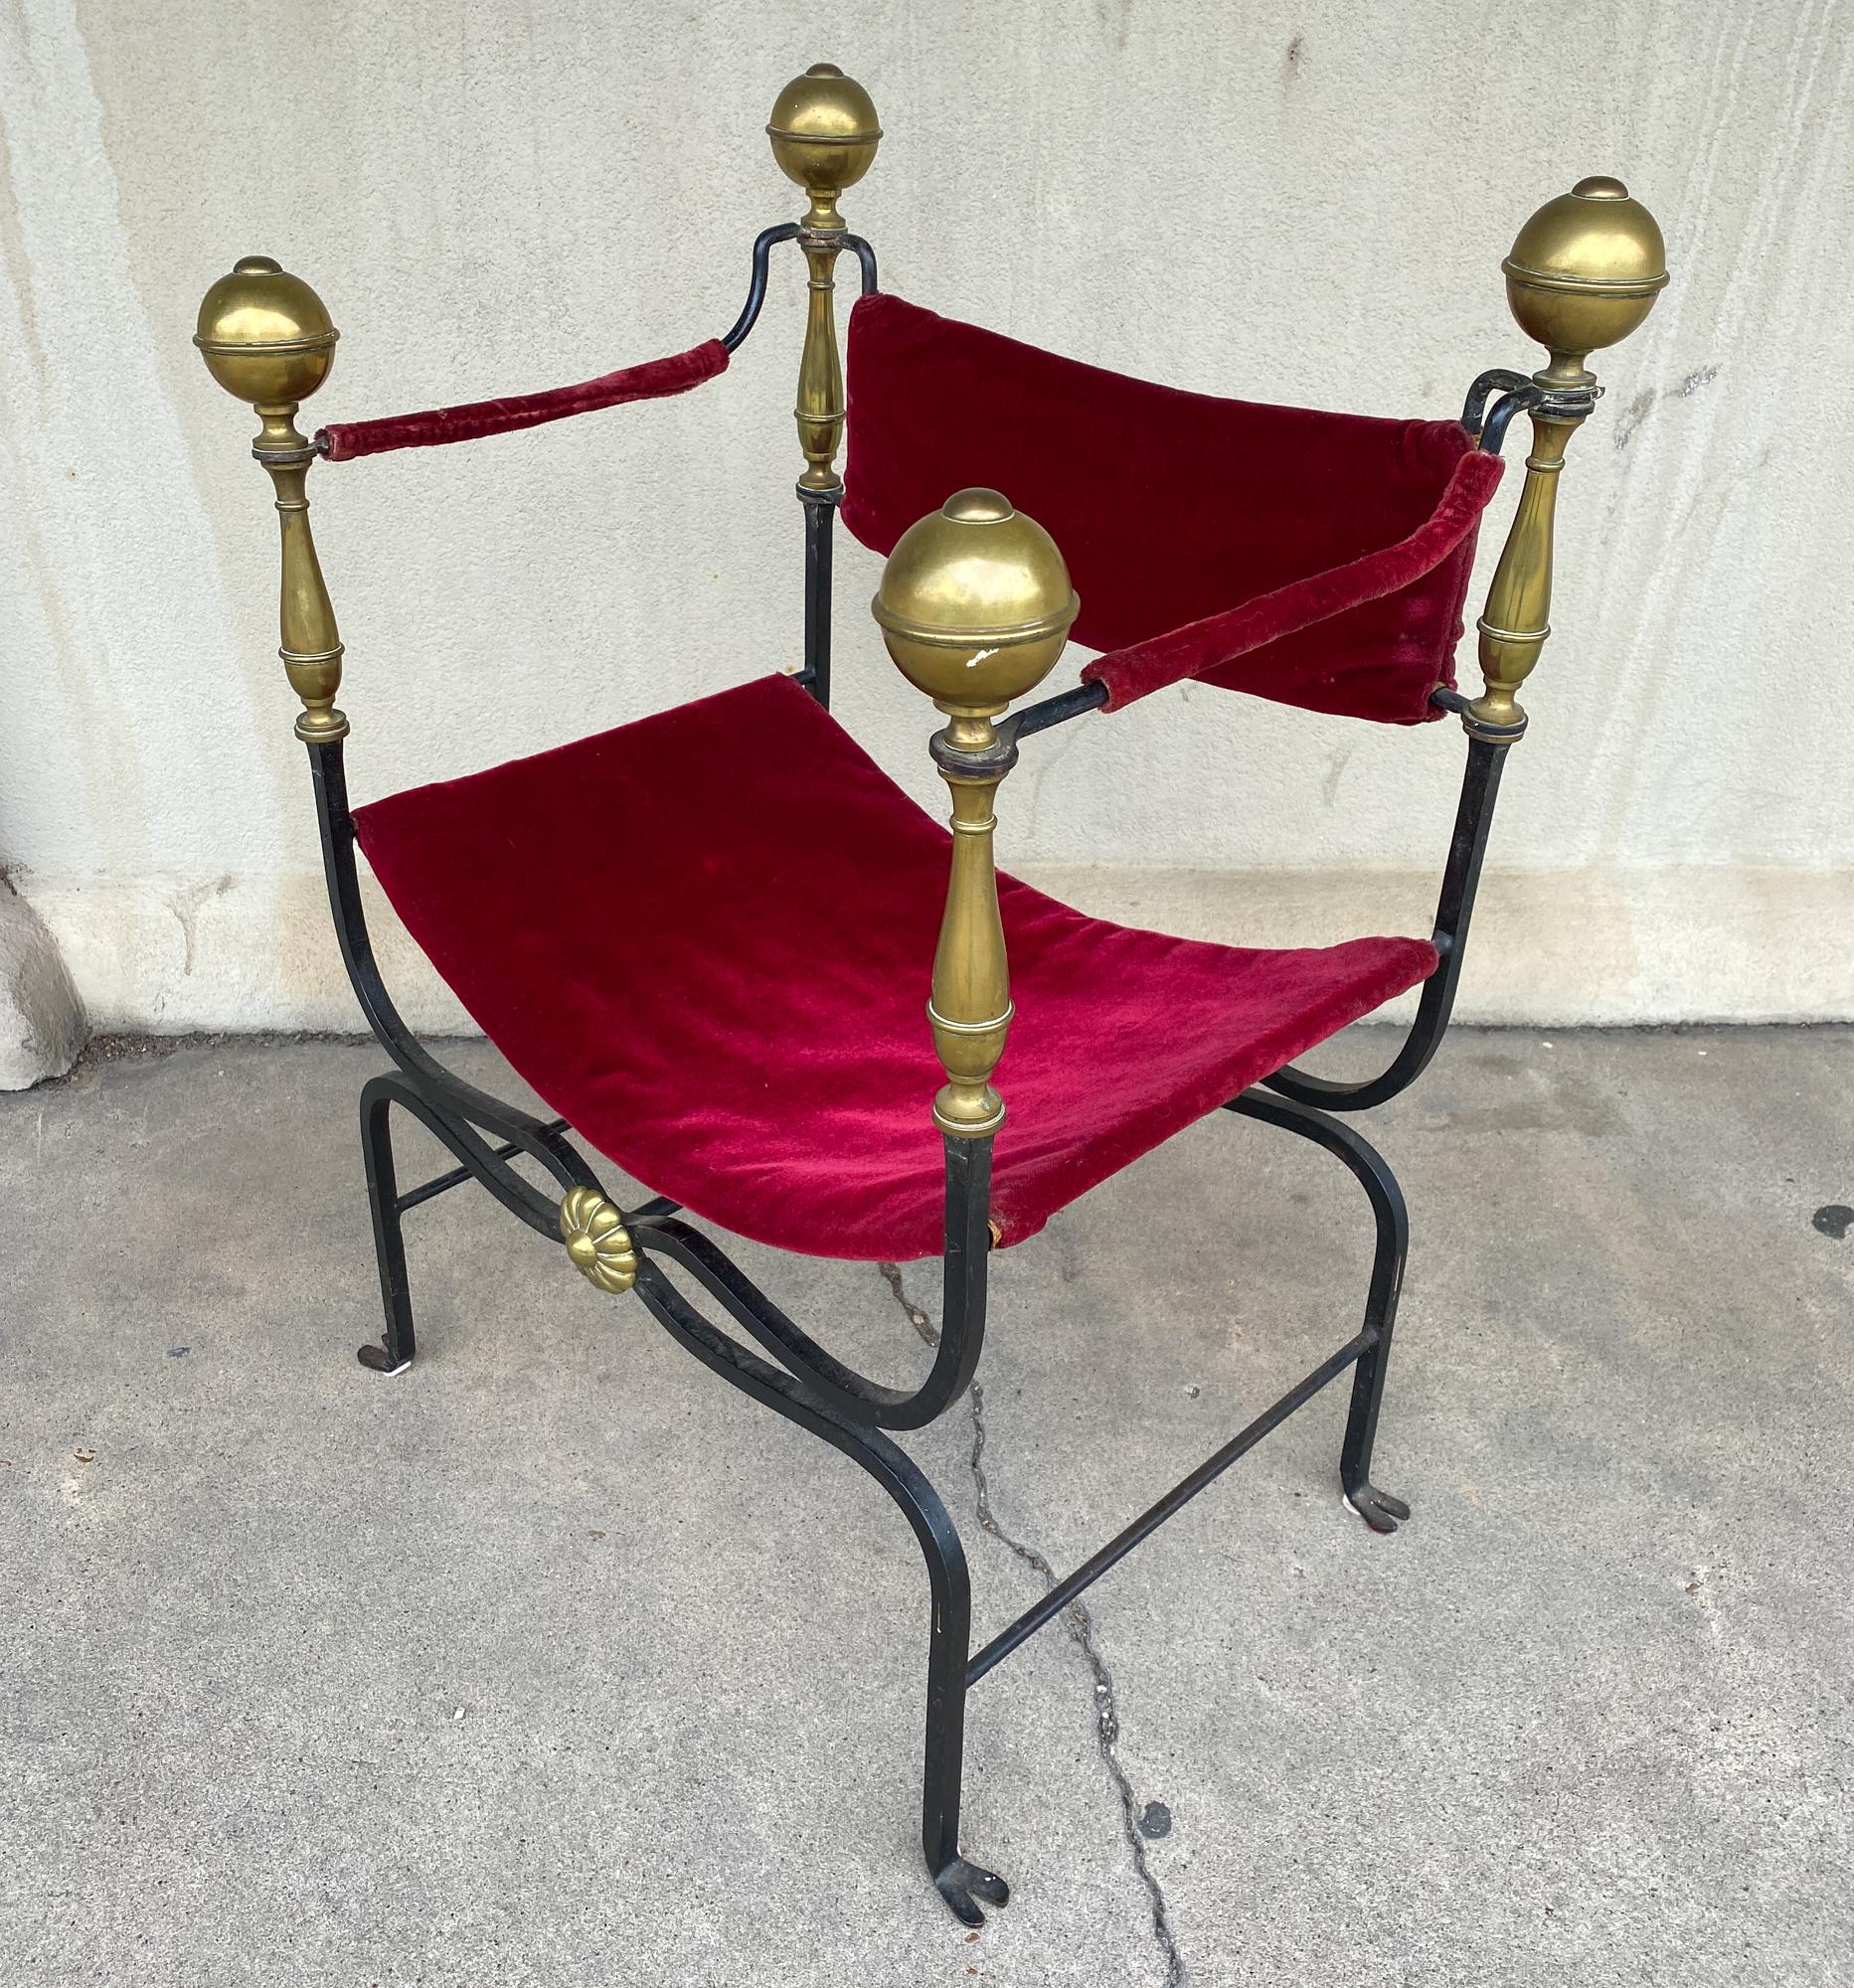 20th Century Midcentury Spanish Iron Savonarola Chair with Brass Accents and Red Velvet